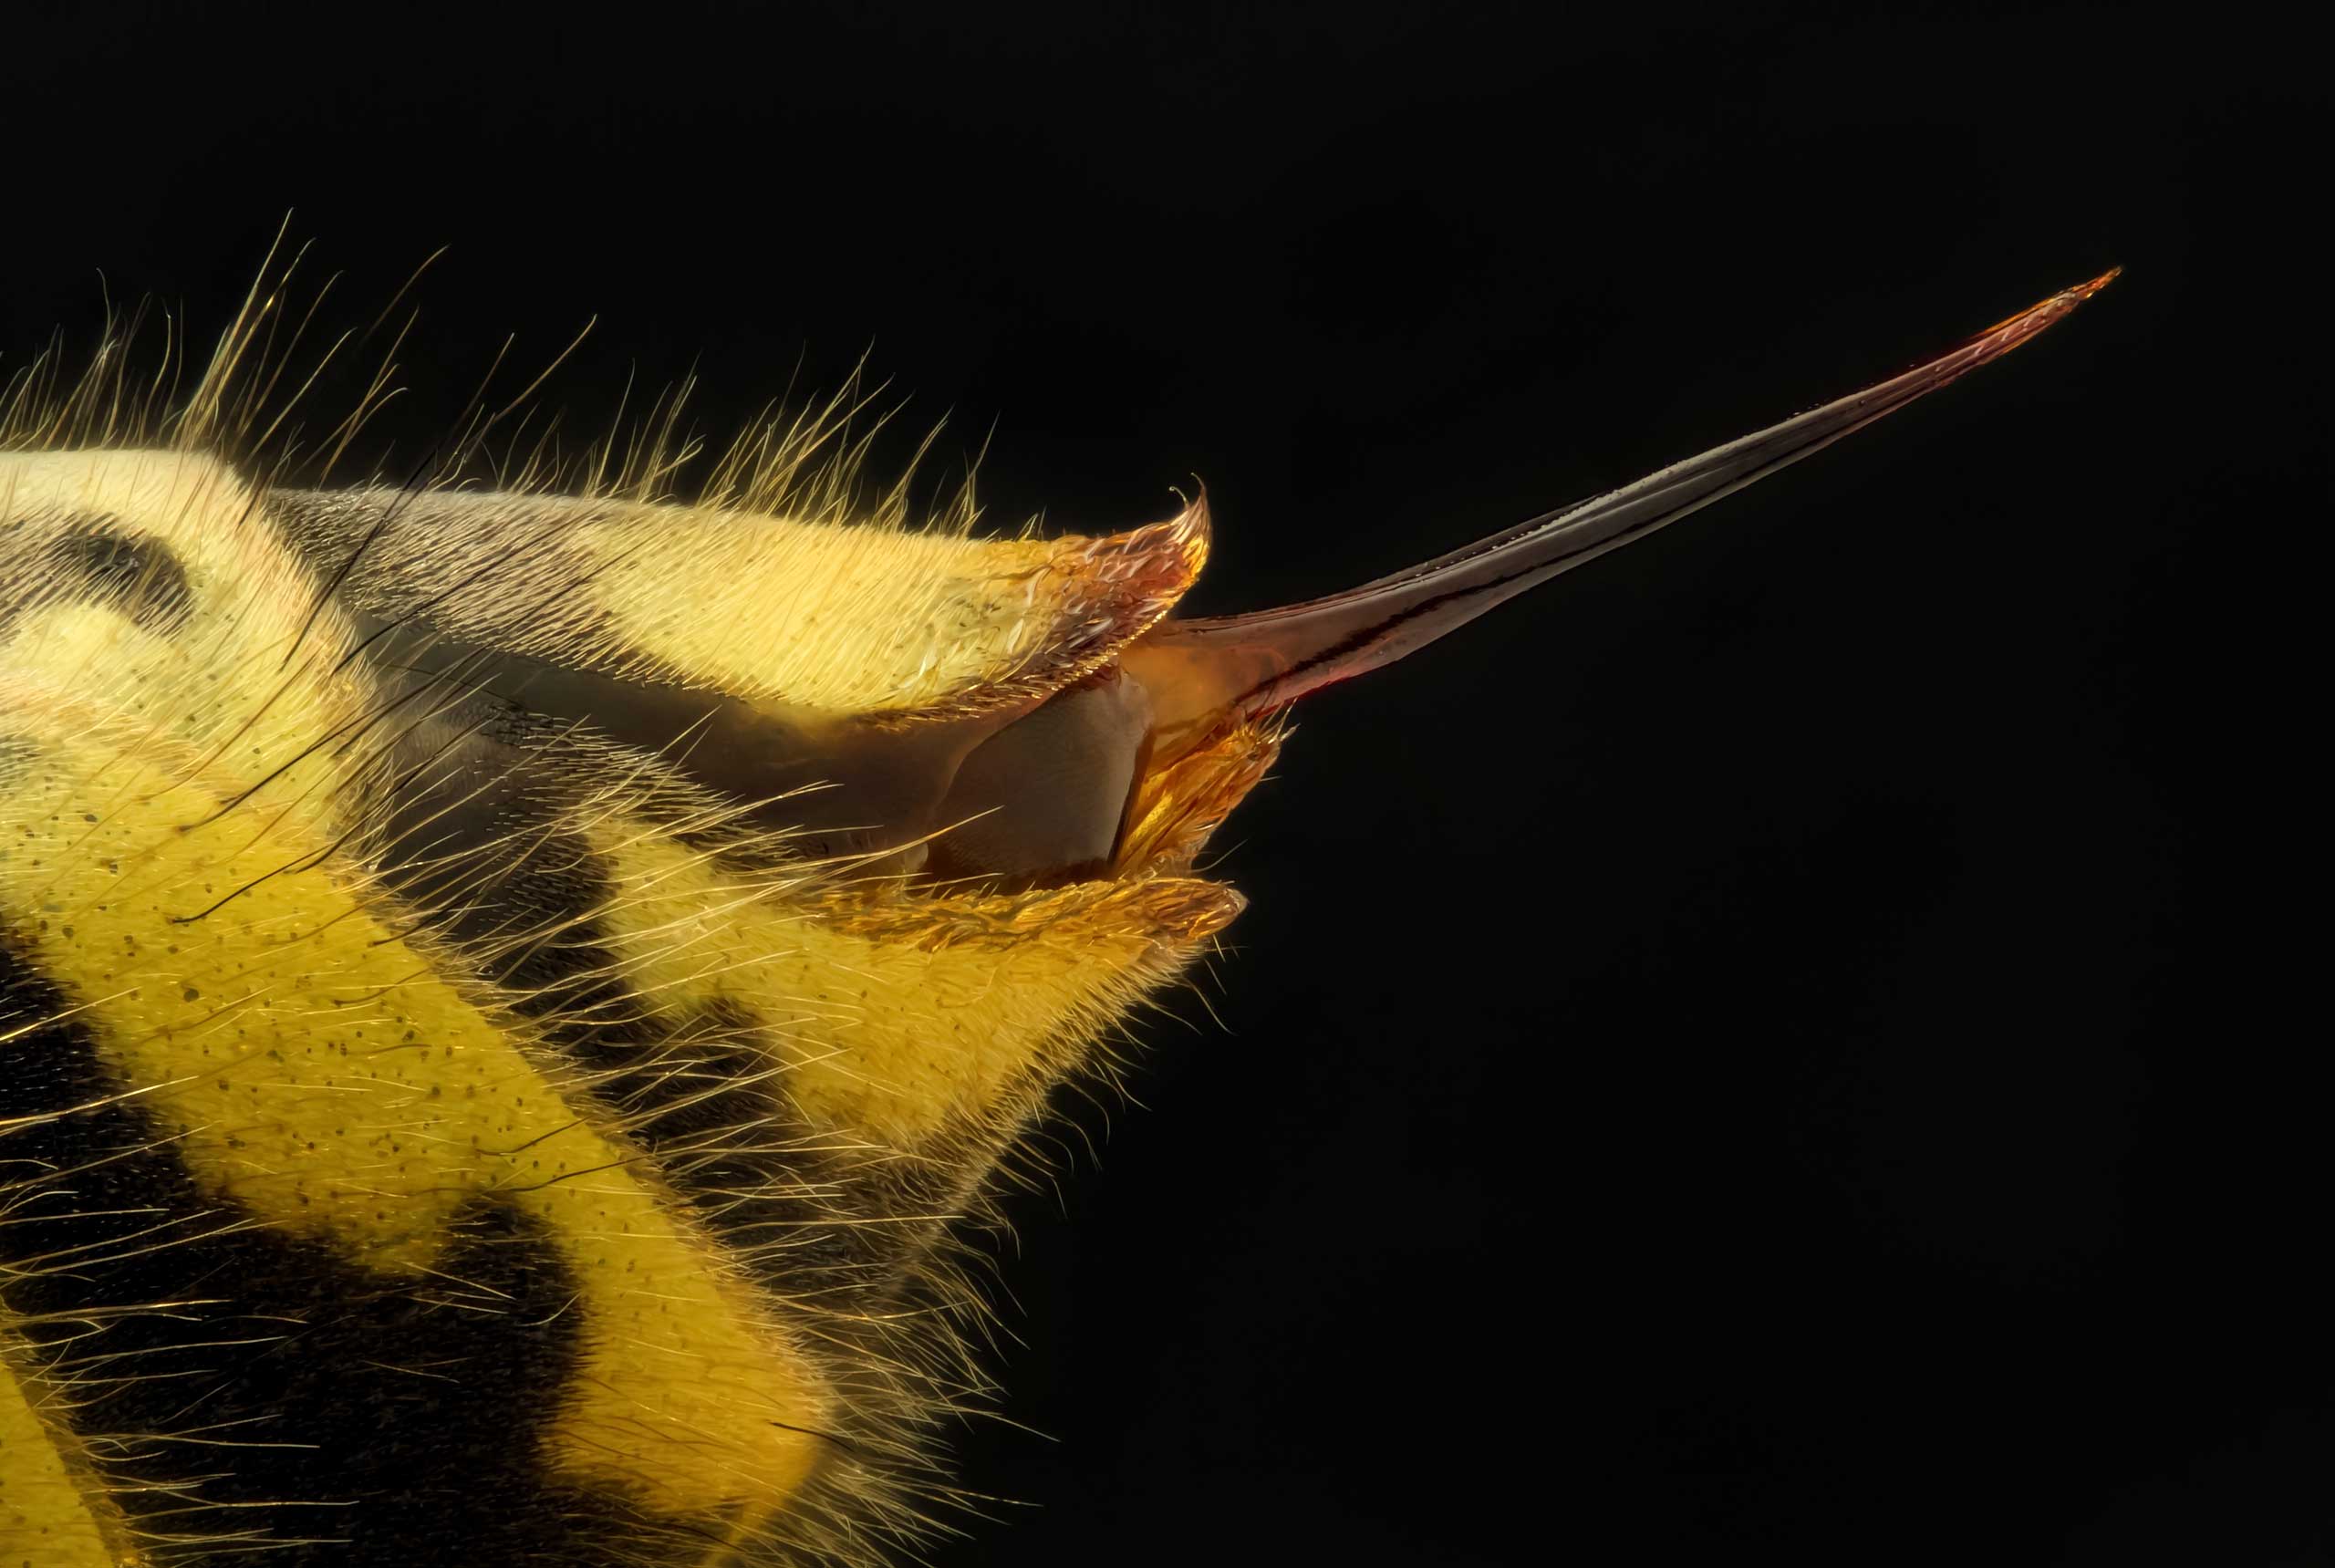 A Vespula vulgaris (common wasp) stinger at 5x magnification.